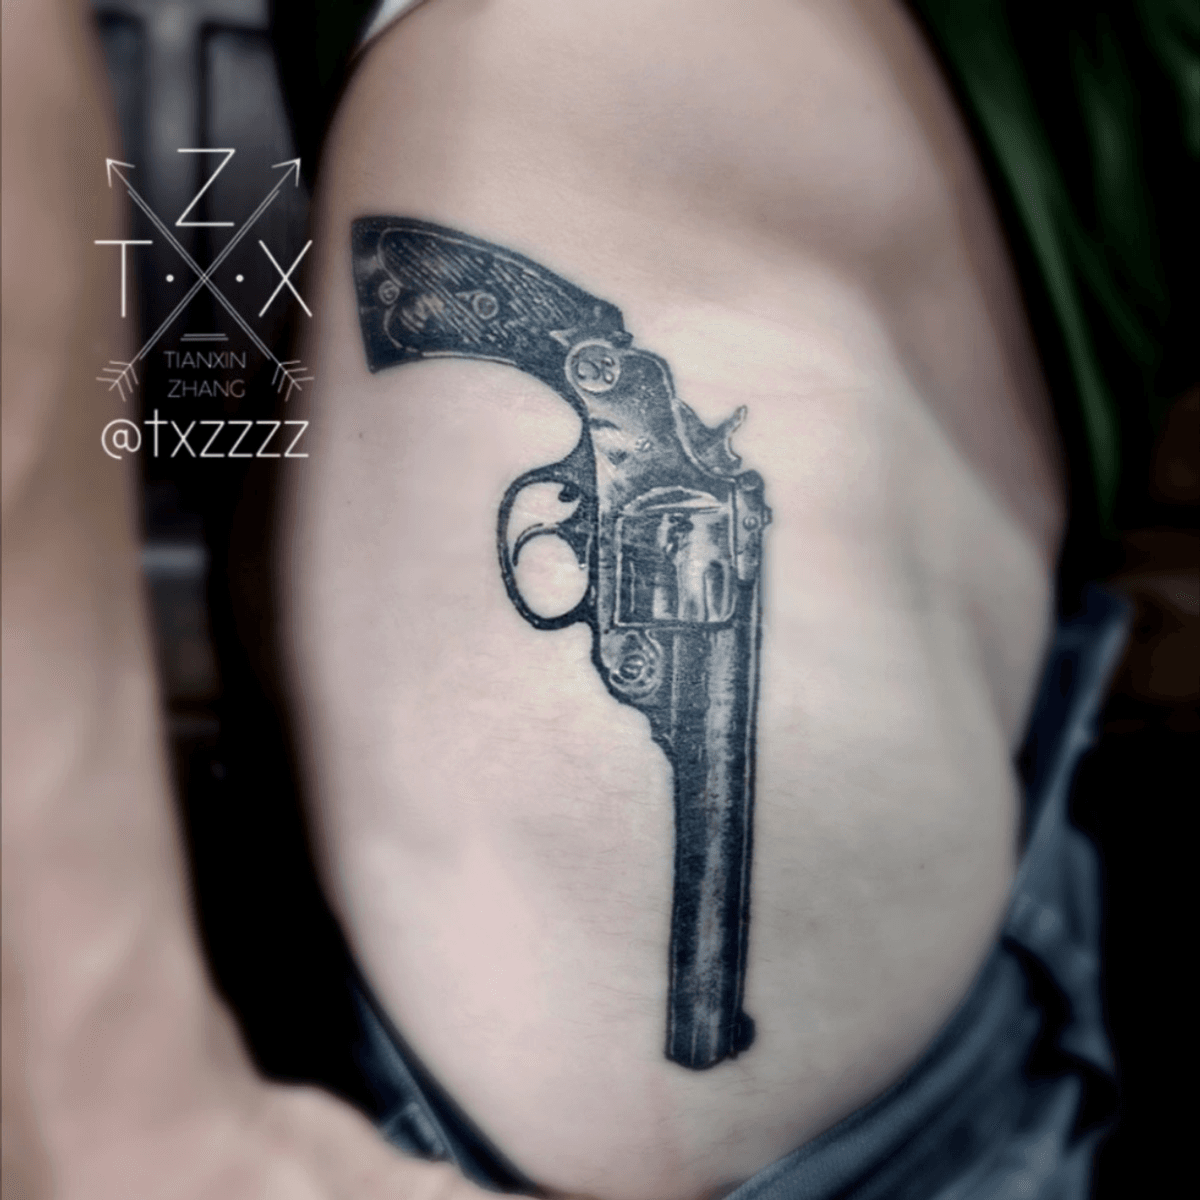 Tattoo uploaded by Tianxin Zhang • Gun. Healed up. • Tattoodo